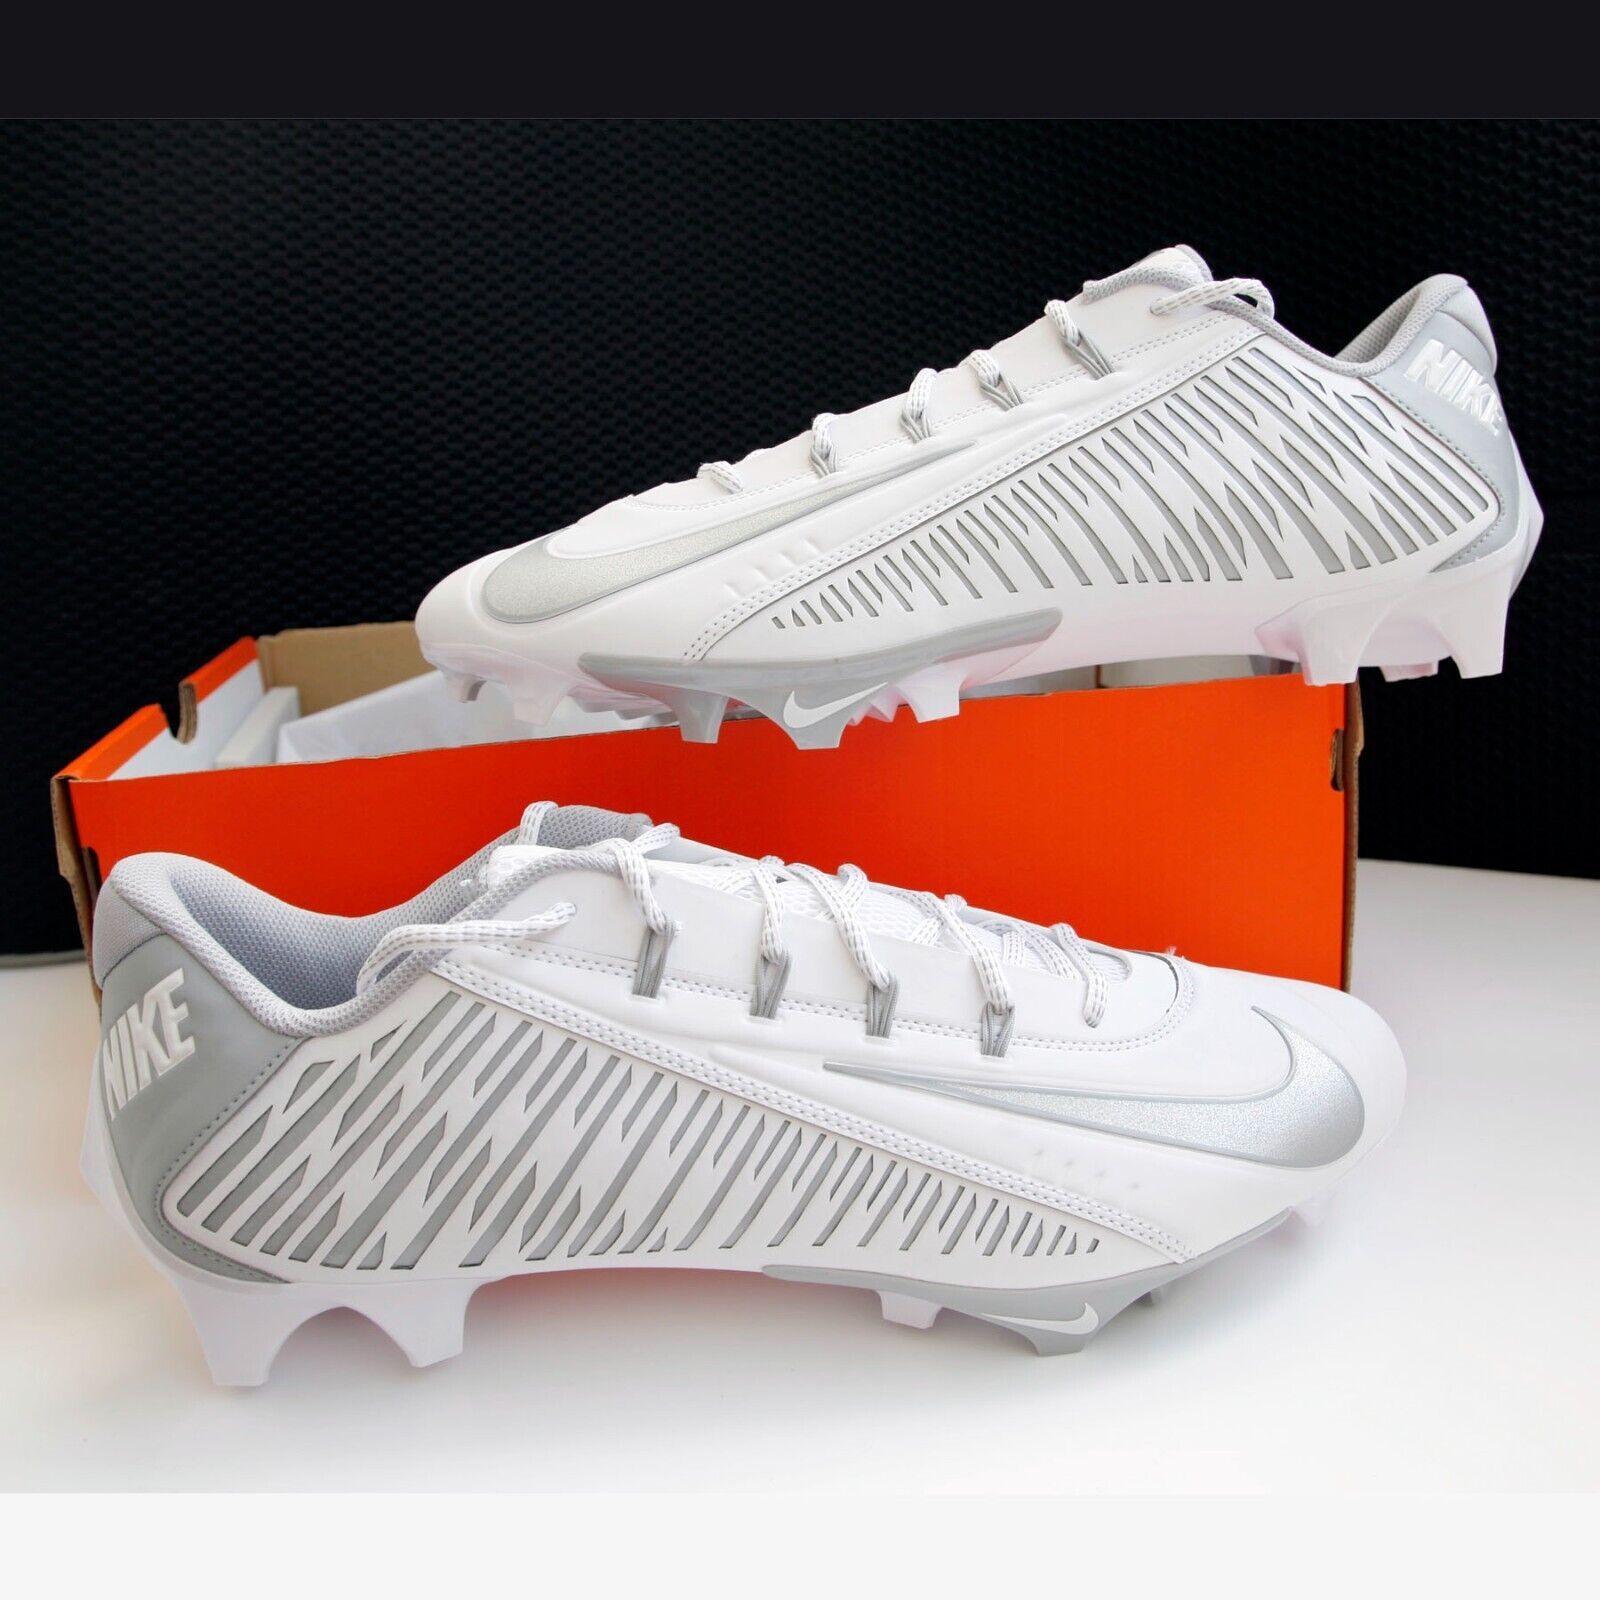 Nike Vapor Edge 360 VC Men's Football Cleats White/Wolf Grey Size 15 REG: $150 - $98.96